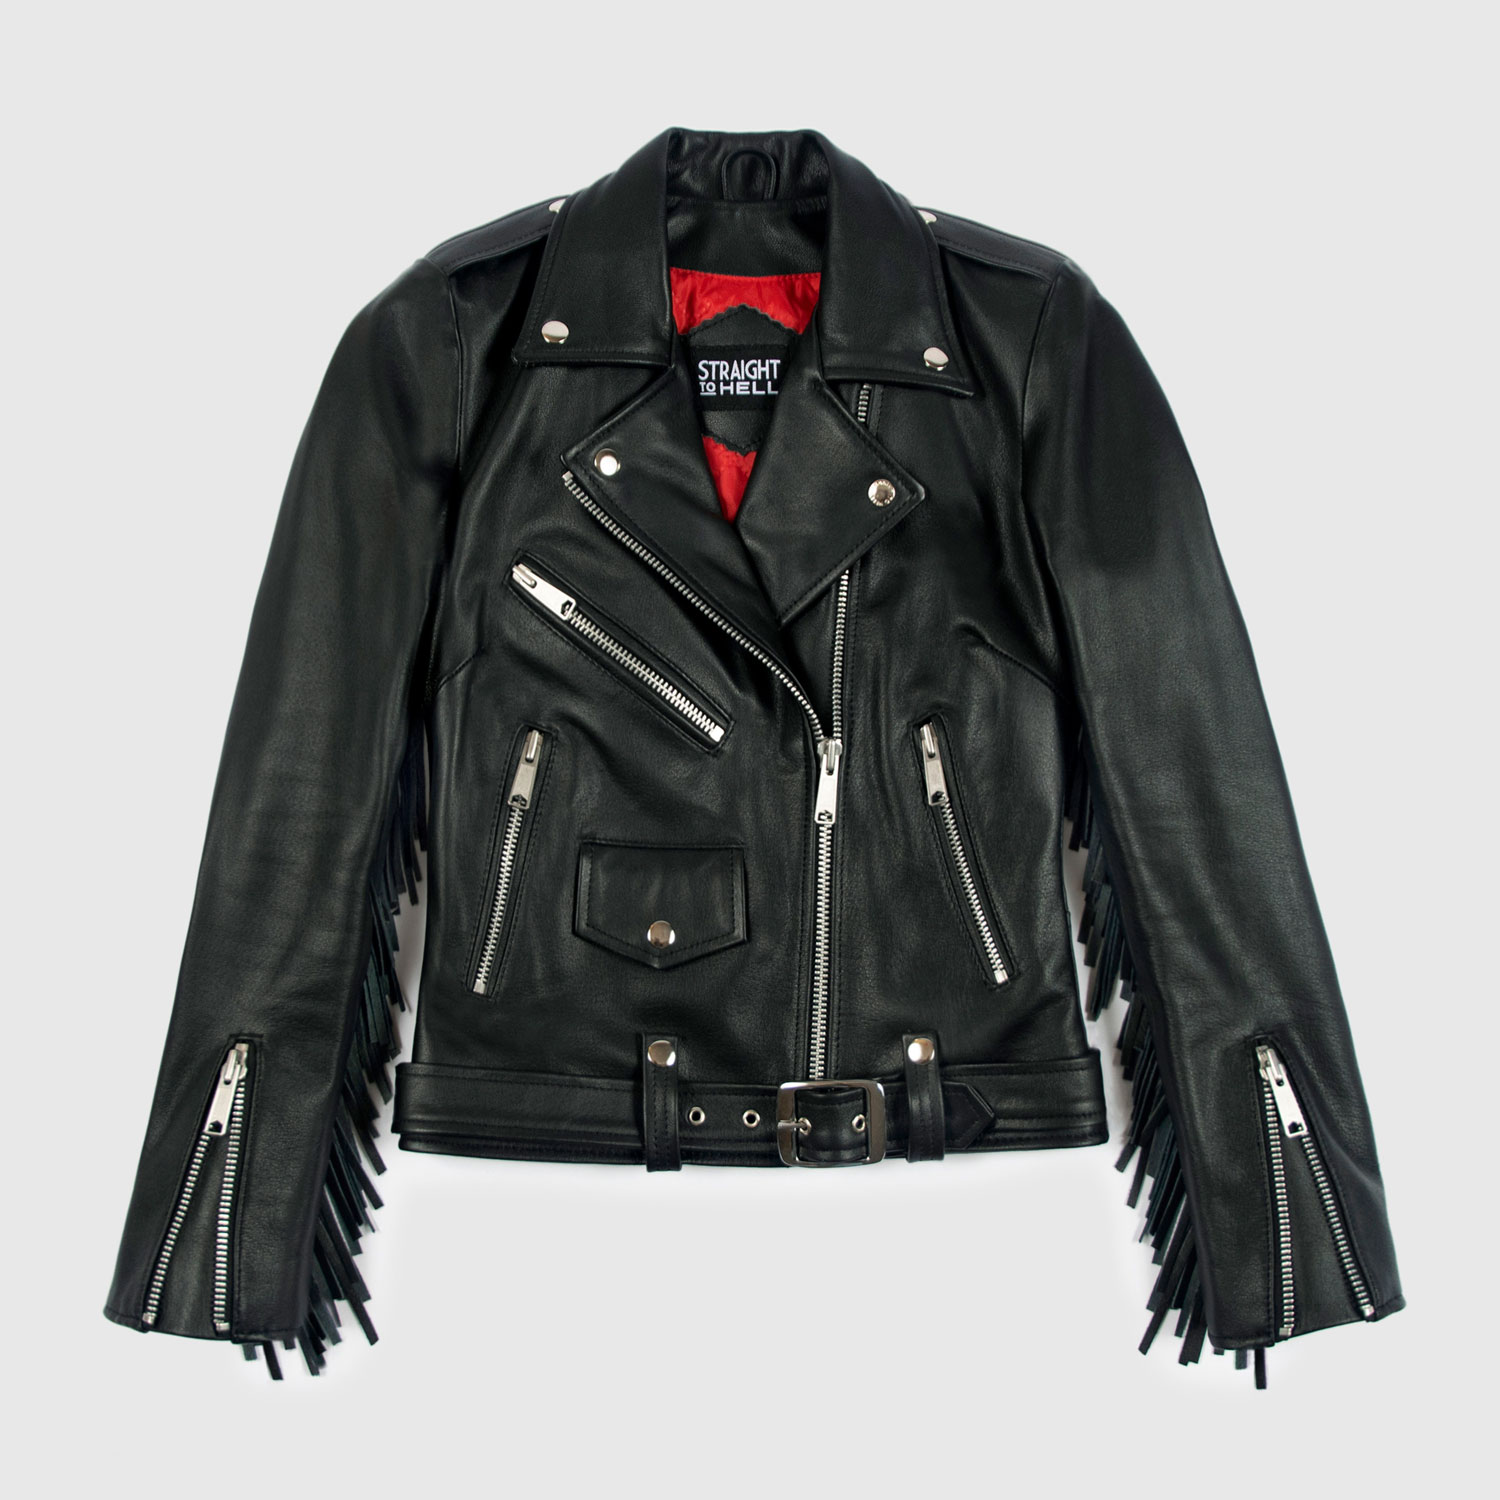 Commando Apparel with Fringe - Jacket | To Leather Hell Straight Fringe